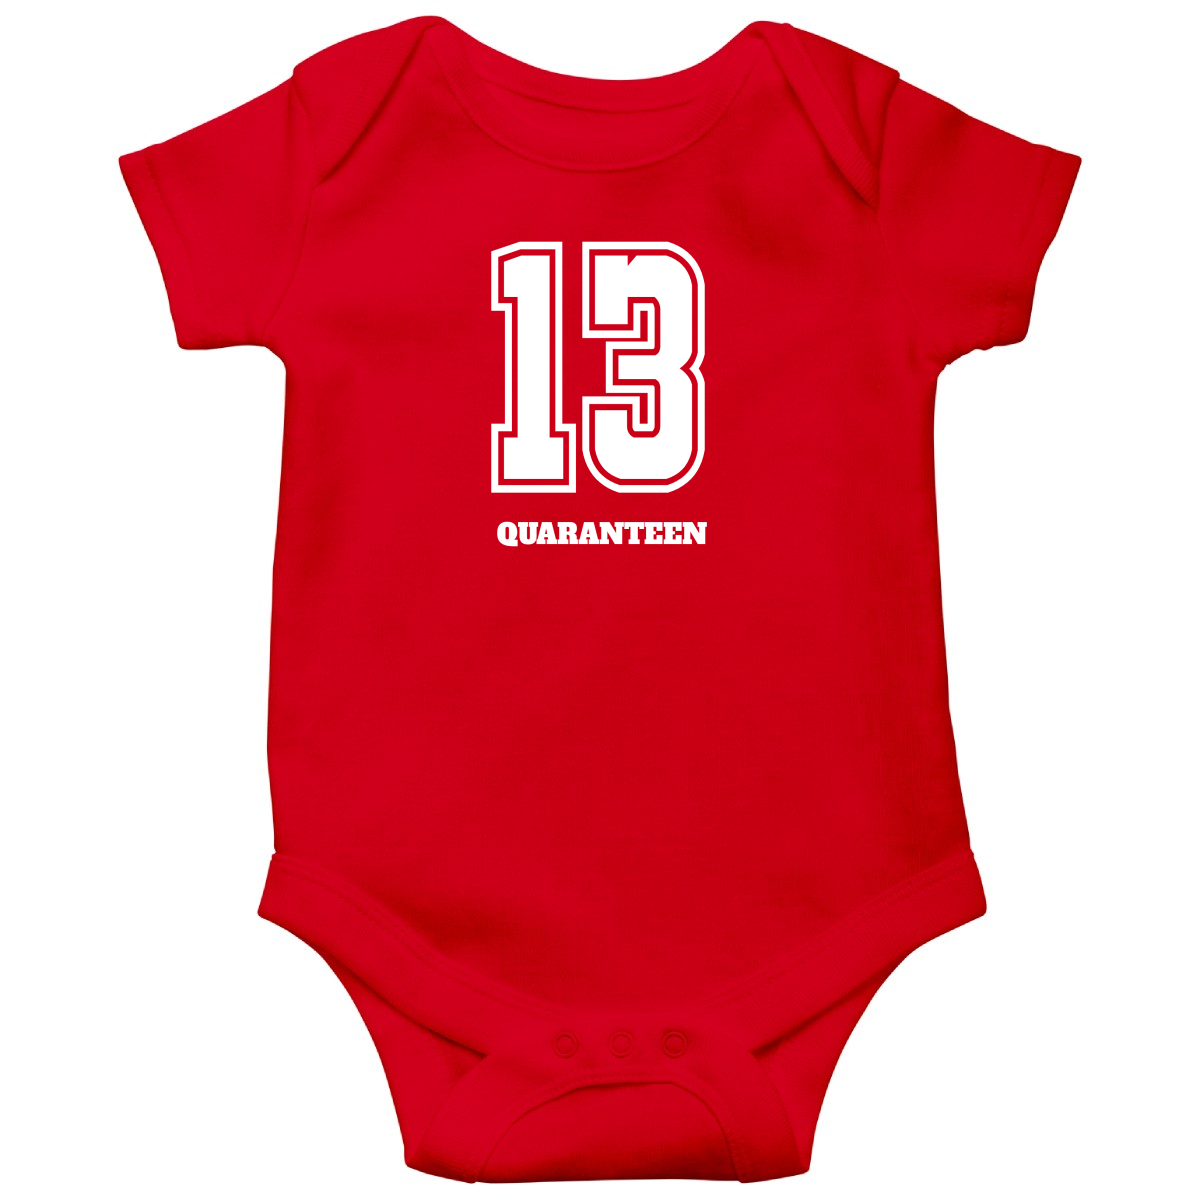 13 QUARANTEEN Baby Bodysuits | Red